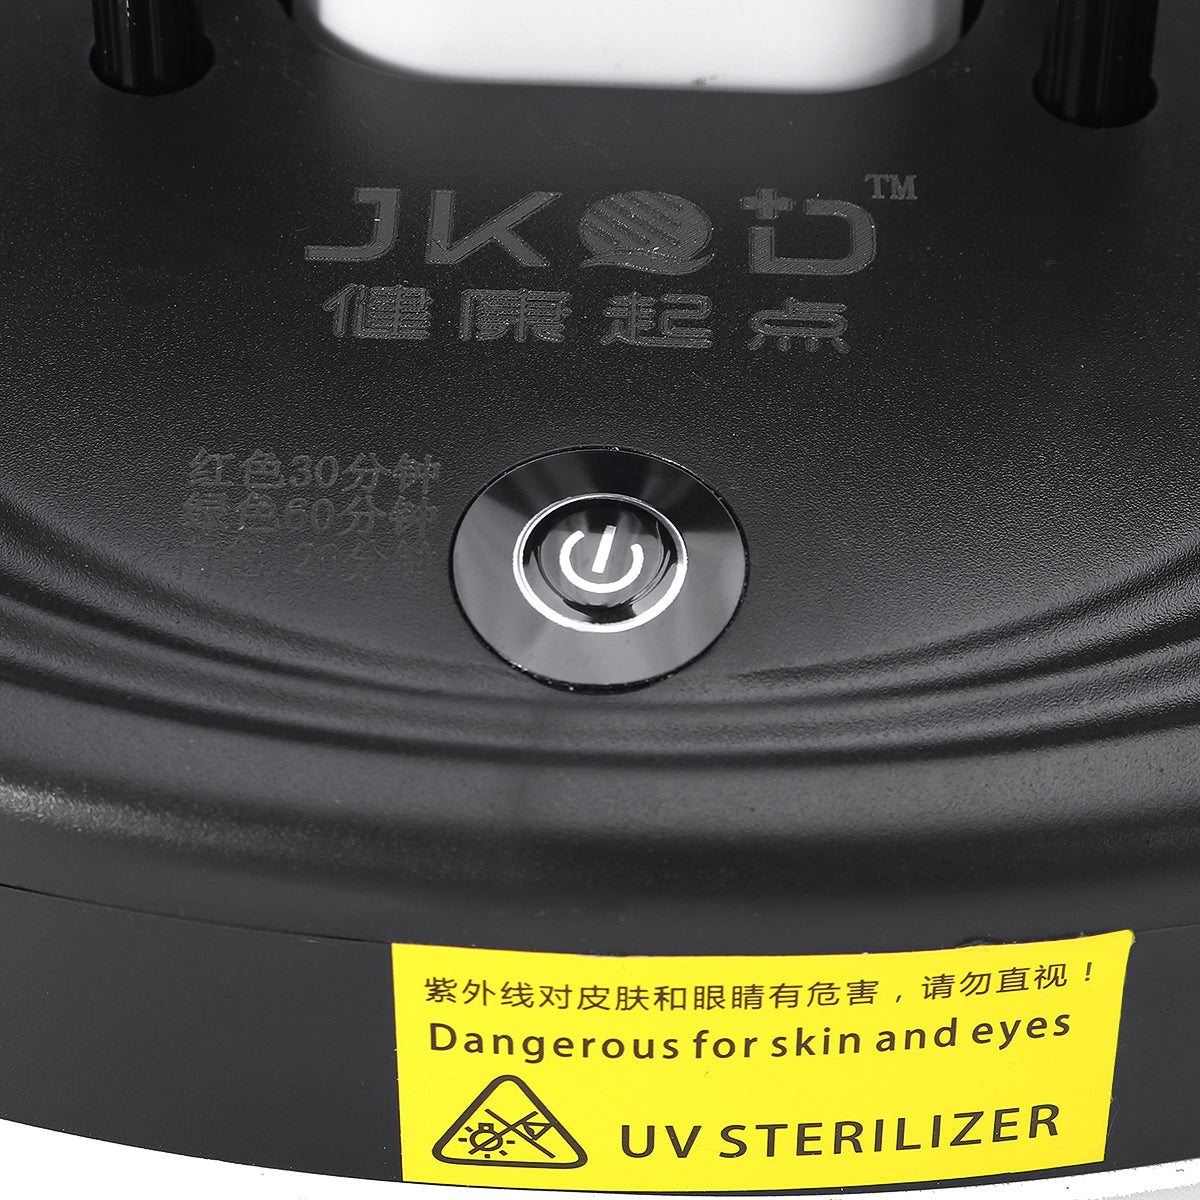 38W Ozone Sterilization Light Ultraviolet UV Germicidal Lamp 220V for Car Home Disinfect Bacterial Kill Mites Deodorizer - Auto GoShop